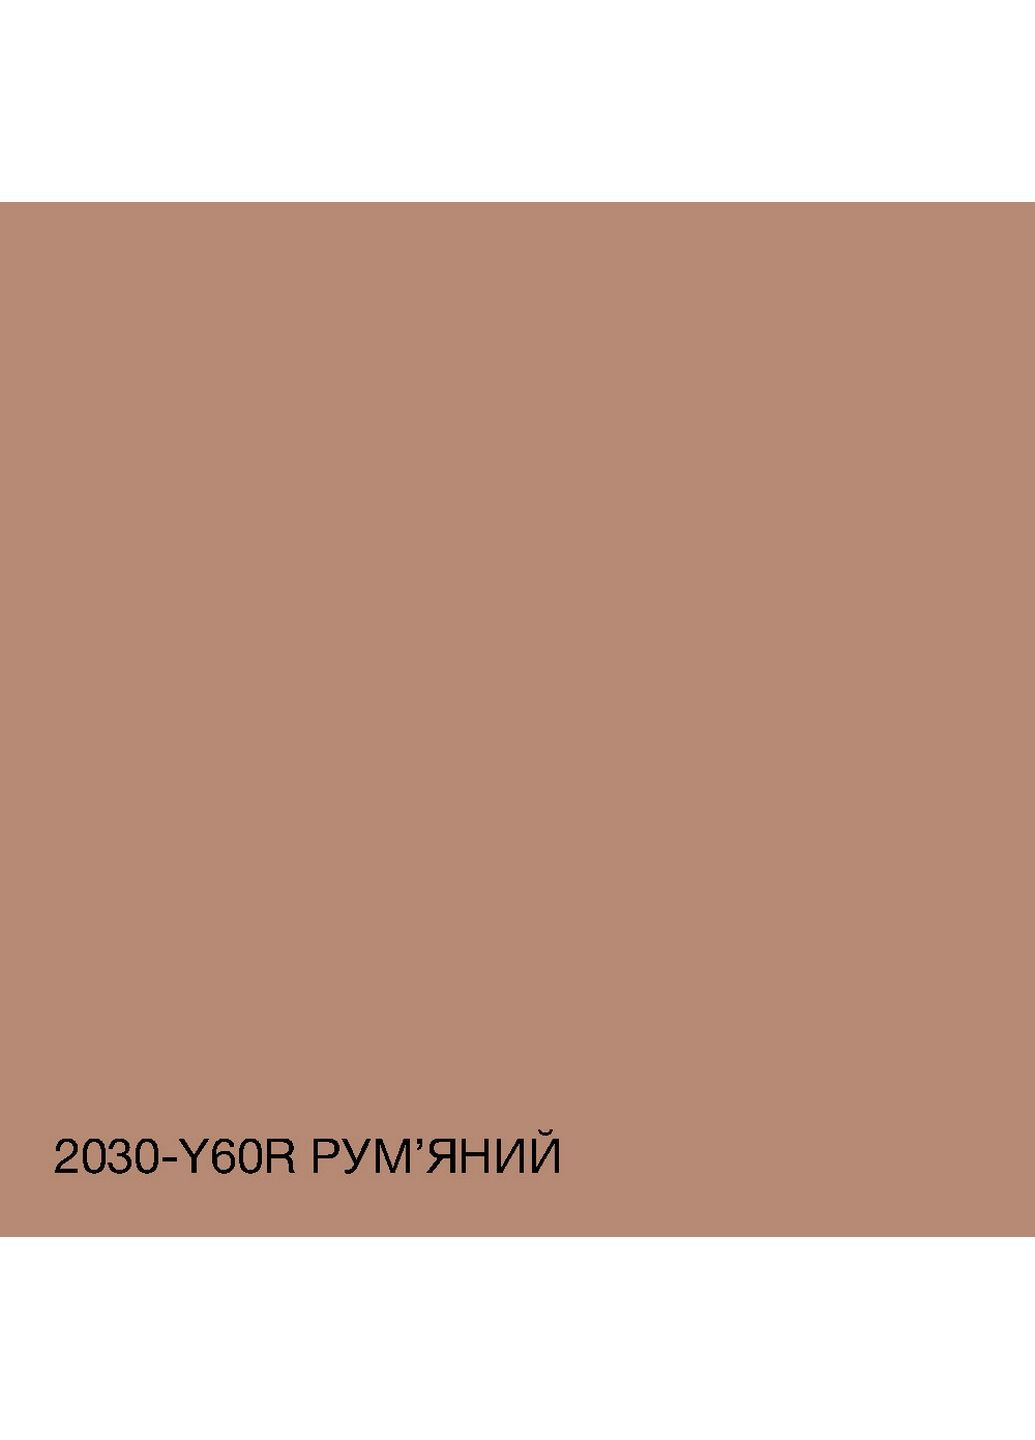 Фасадна фарба акрил-латексна 2030-Y60R 10 л SkyLine (289367779)